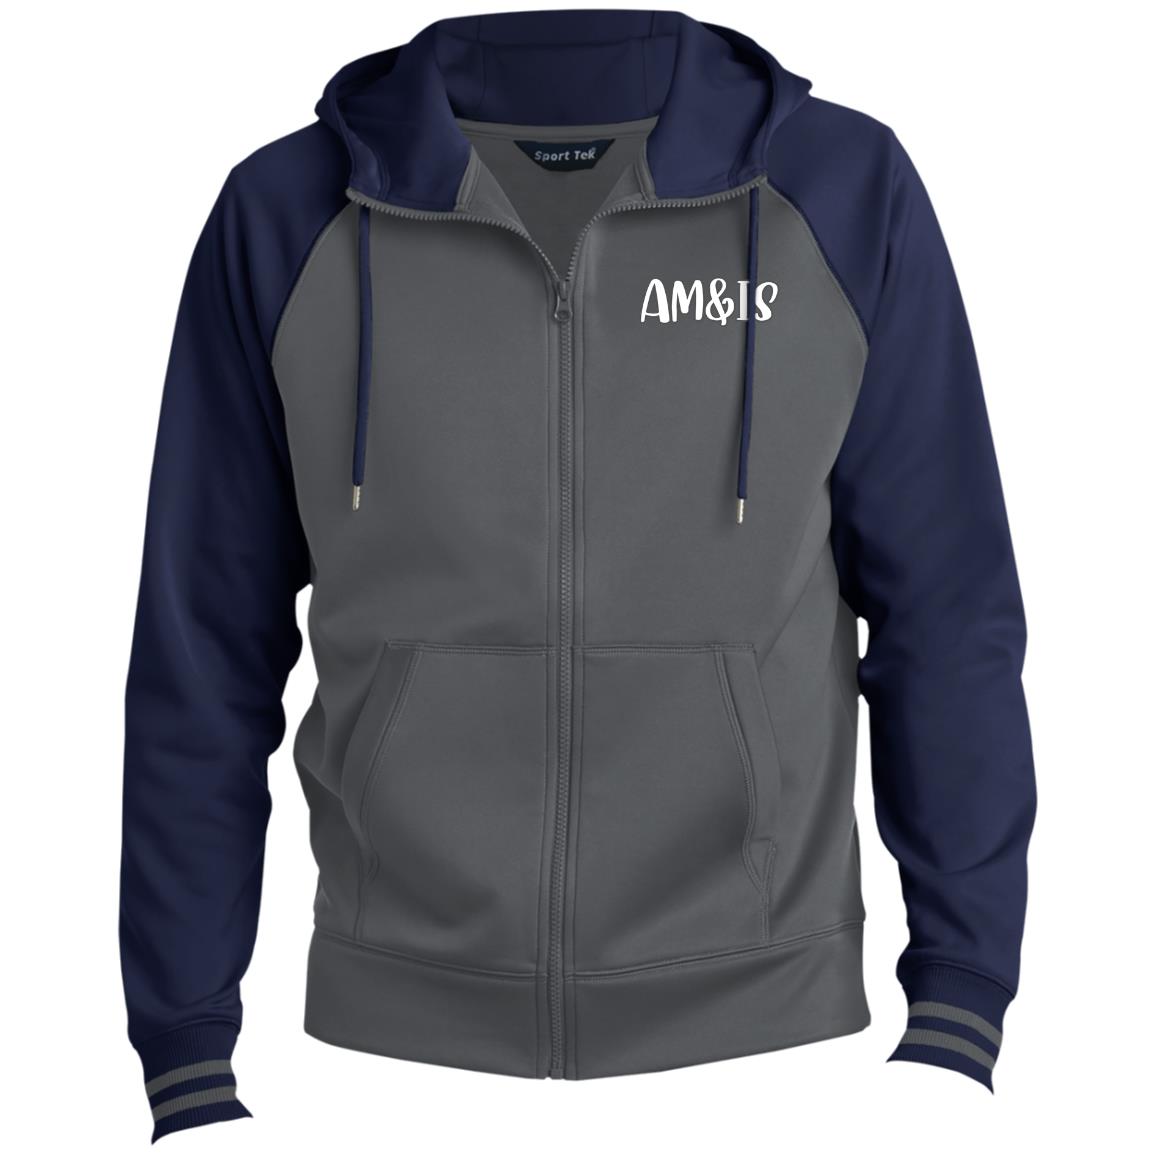 DARK SMOKE/NAVY - AM&IS Activewear Men's Sport-Wick® Full-Zip Hooded Jacket - mens jacket at TFC&H Co.